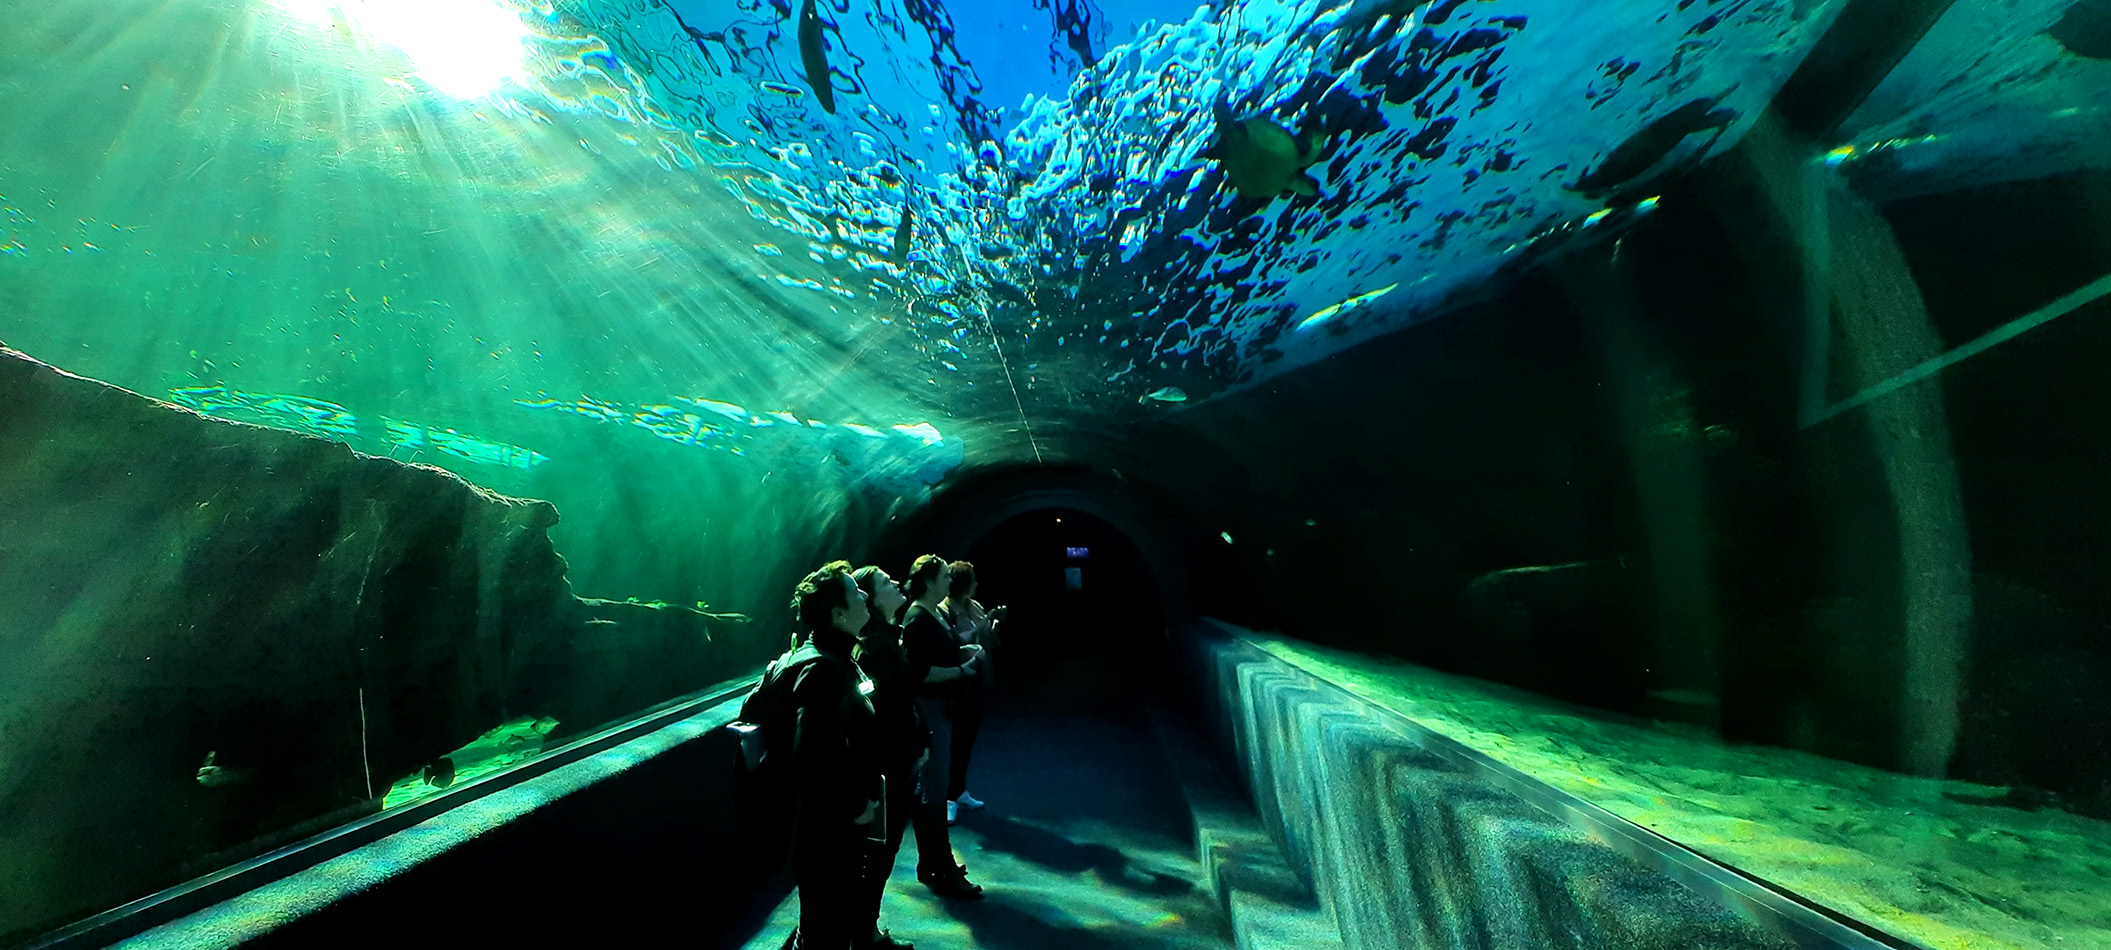 aquarium main tank